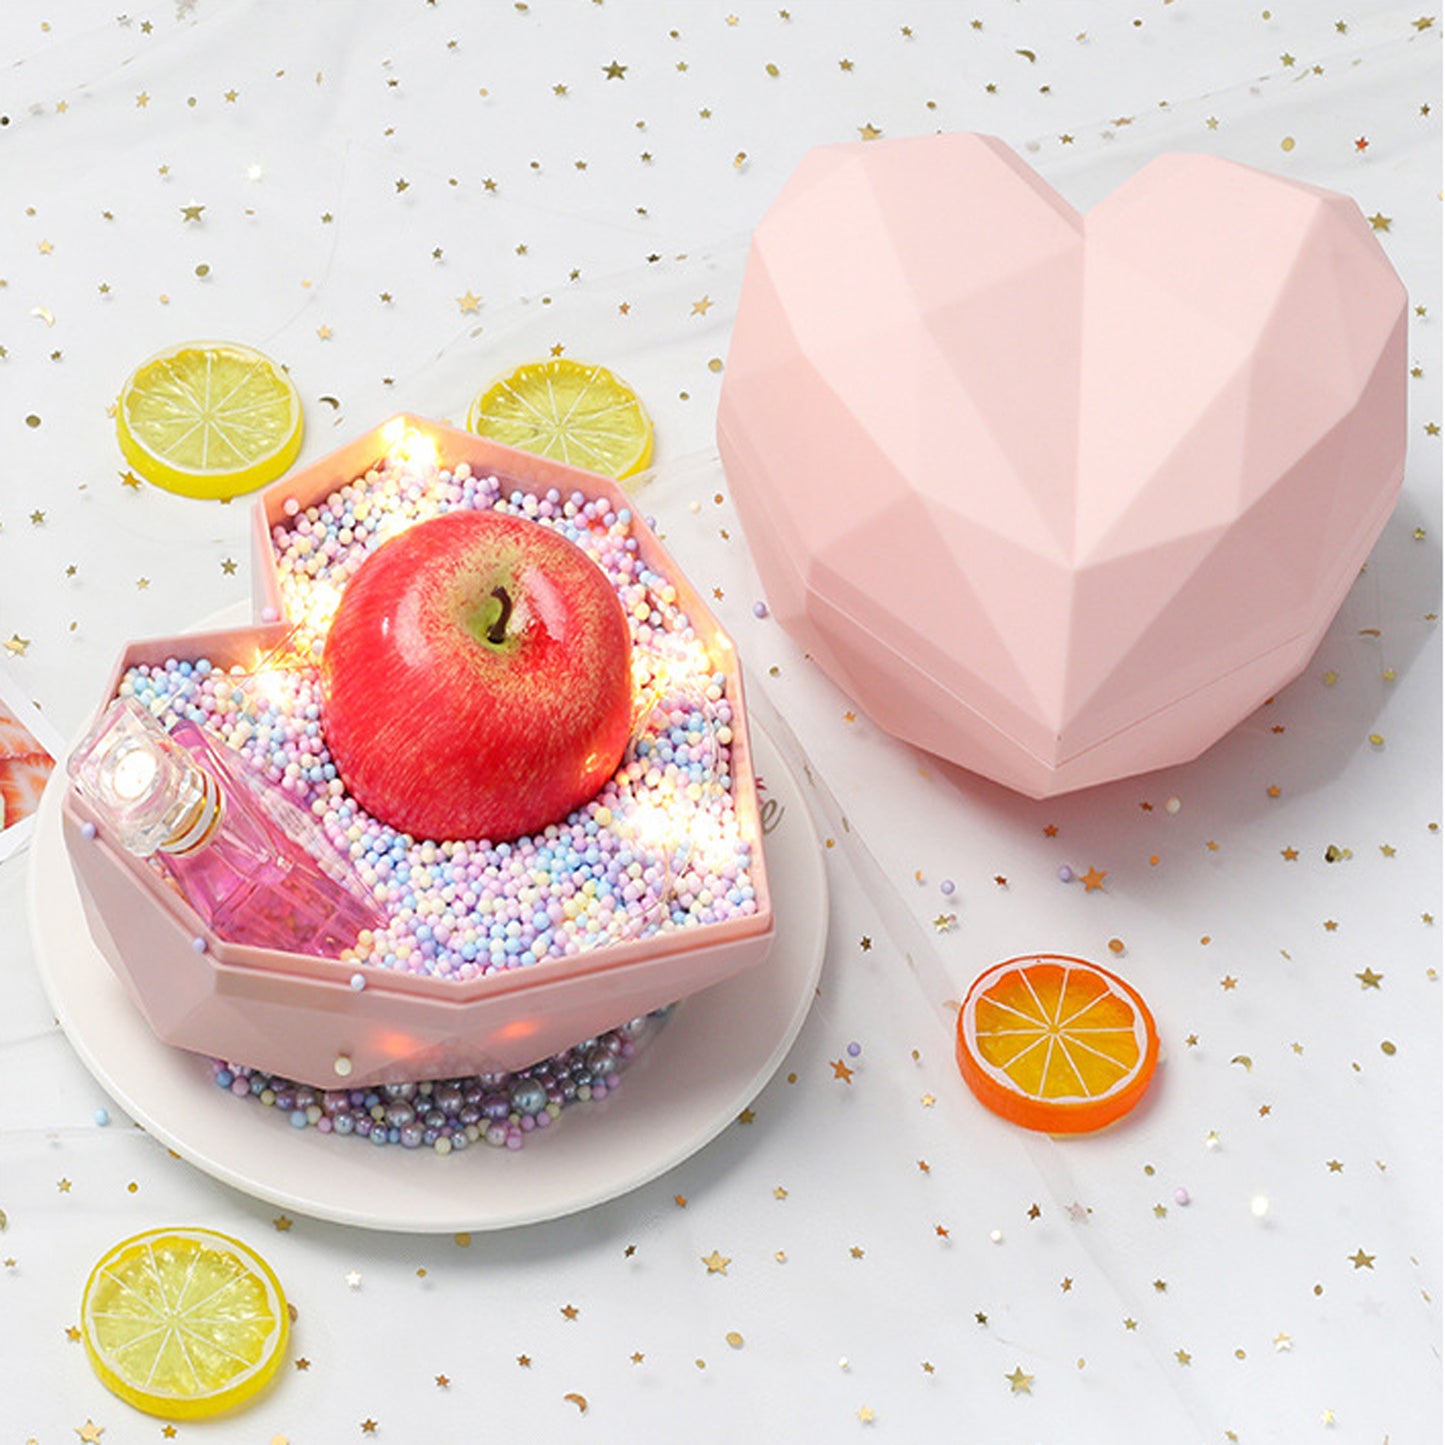 Diamond Shaped Heart Gift Box